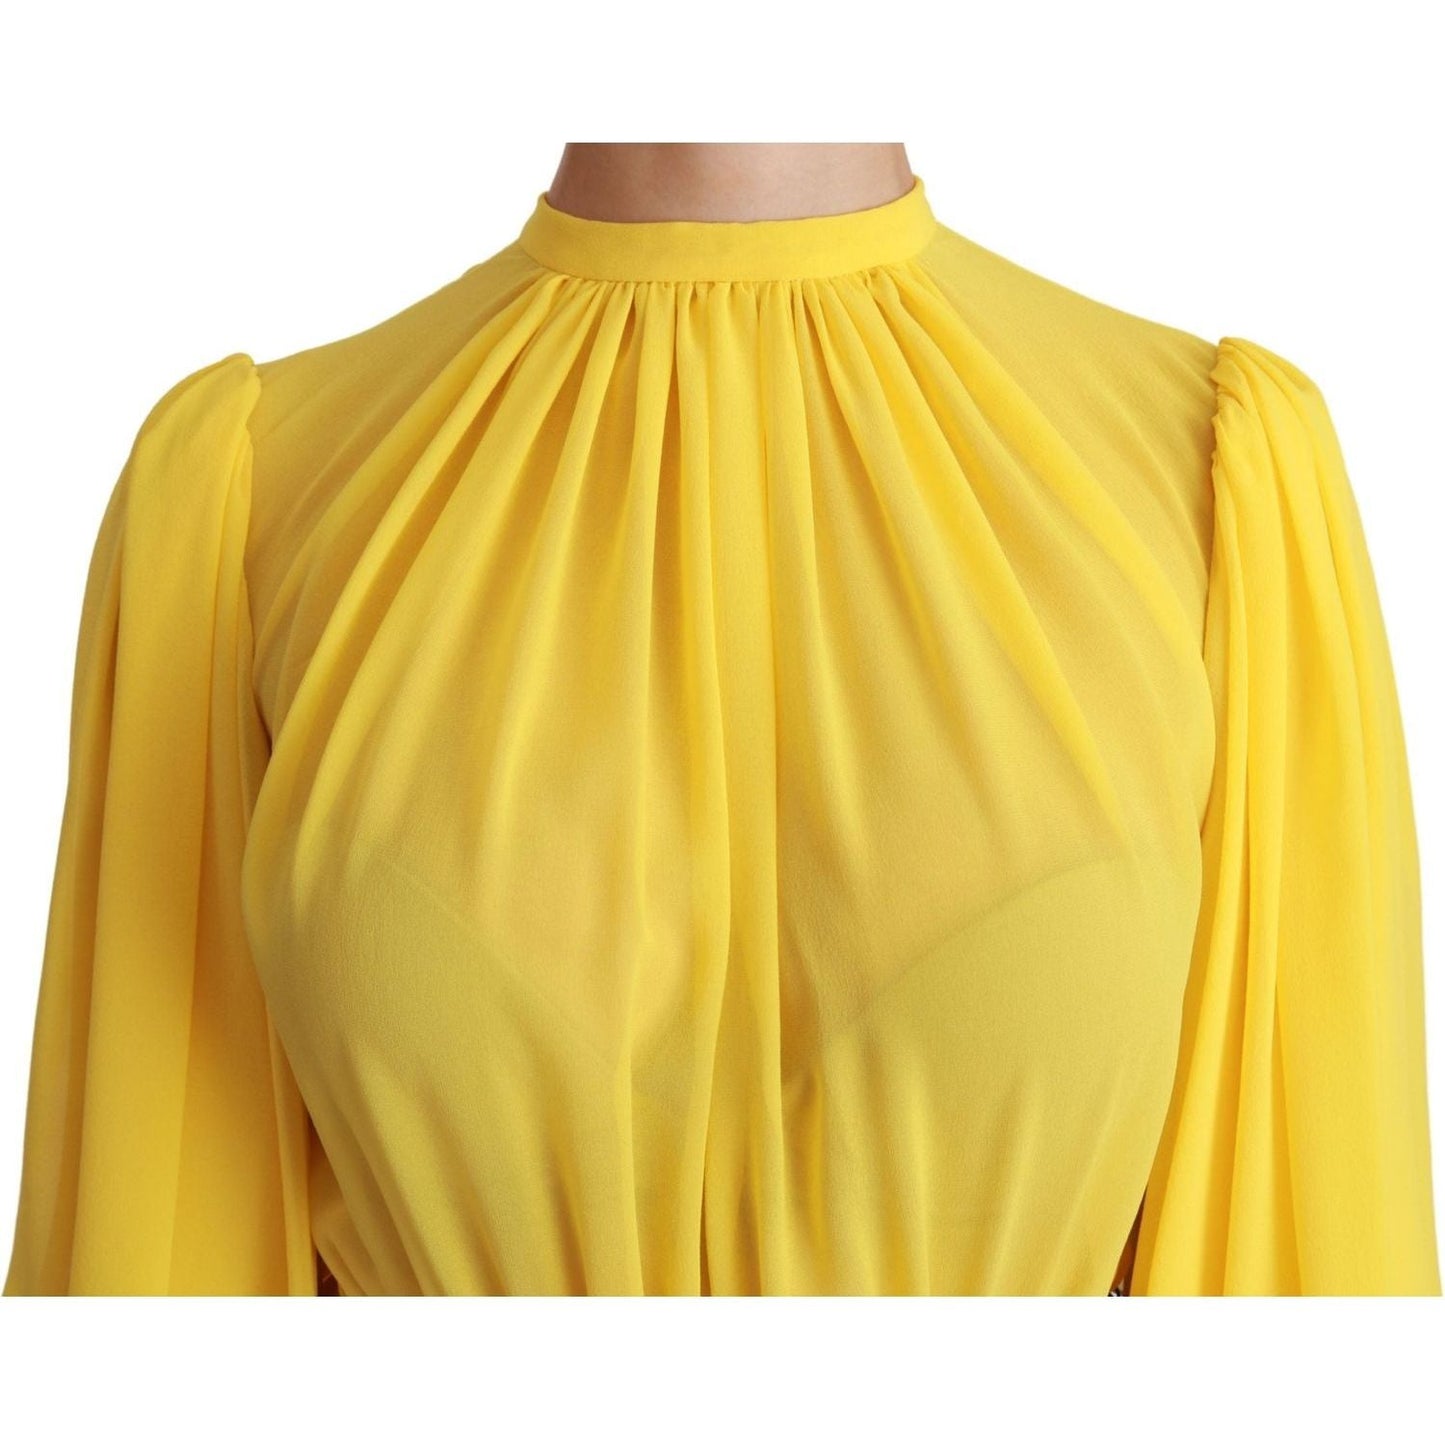 Dolce & GabbanaSilk Pleated A-line Mini Dress in Sunshine YellowMcRichard Designer Brands£919.00